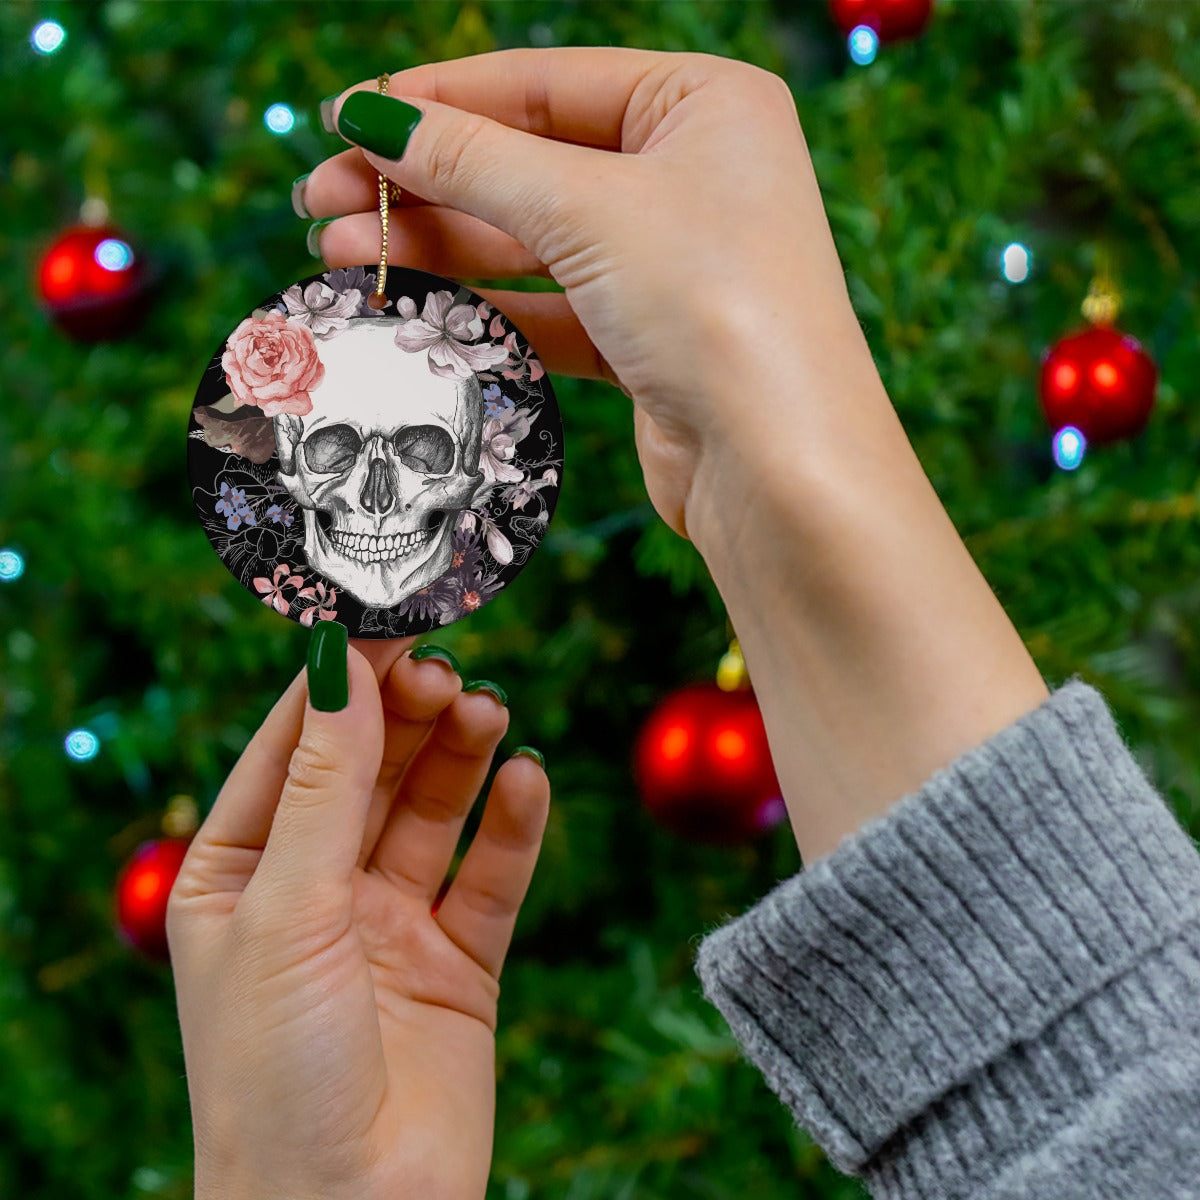 Floral skull Round Christmas Ceramic pendant, Skeleton skull ornament, skeleton christmas ornament